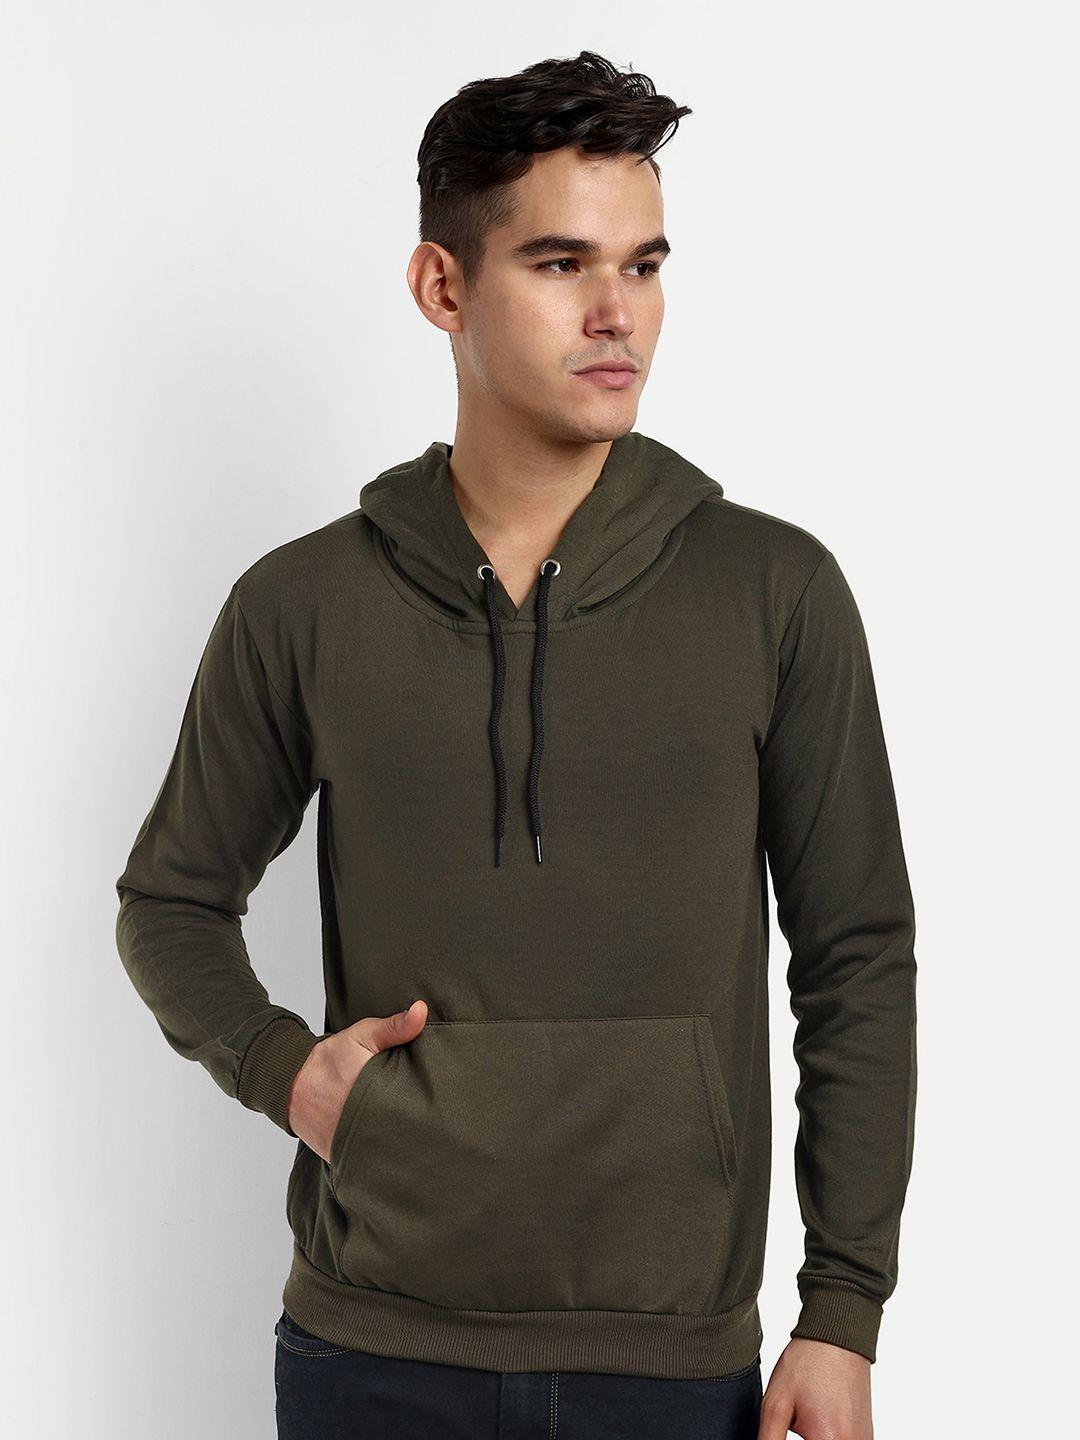 divra clothing unisex long sleeves fleece hooded pullover sweatshirt